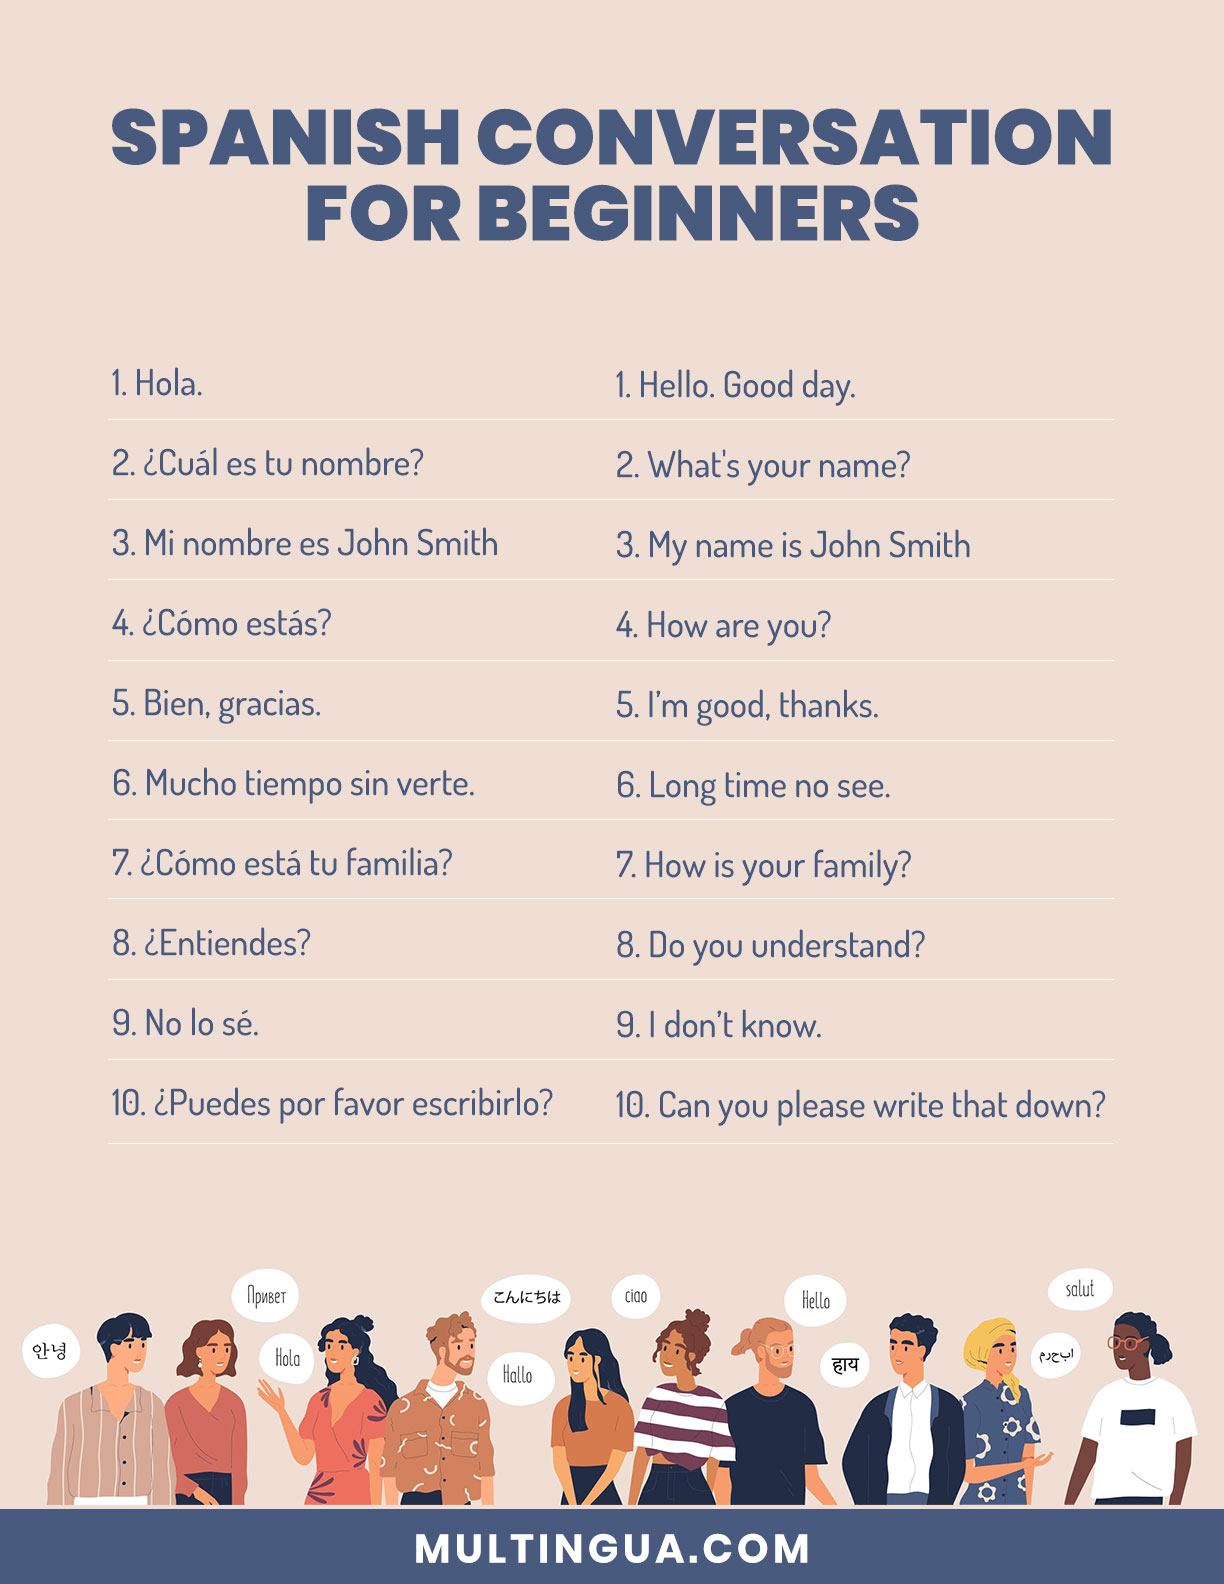 Spanish Conversation For Beginners Part 1 Multingua